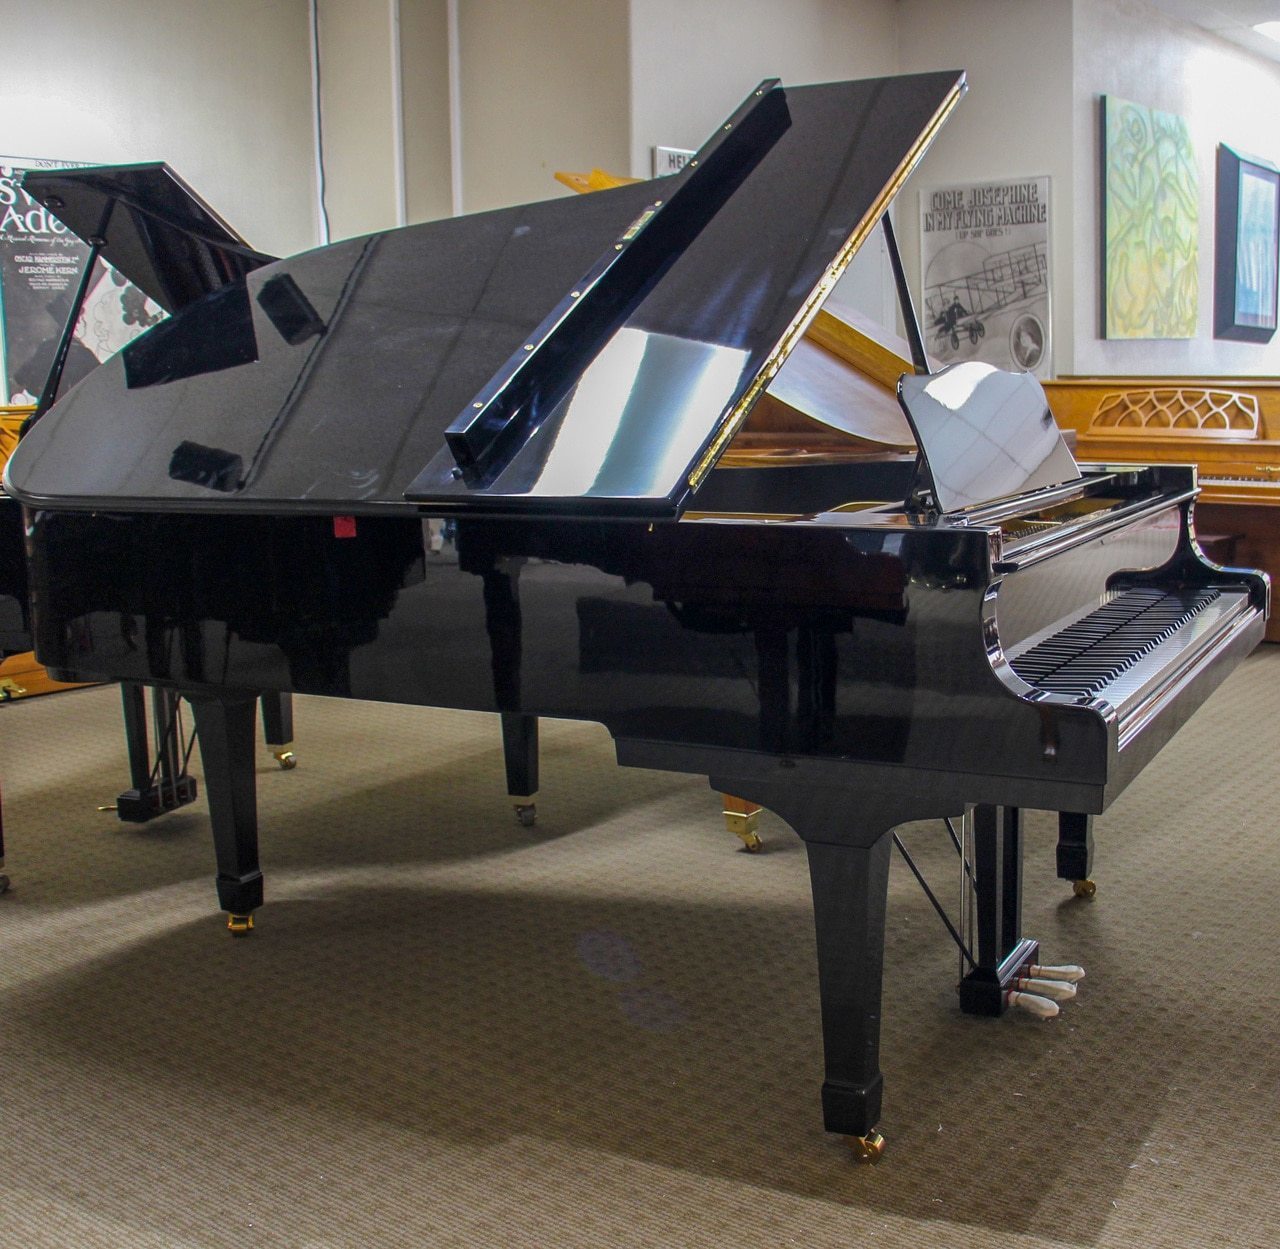 yamaha concert grand piano